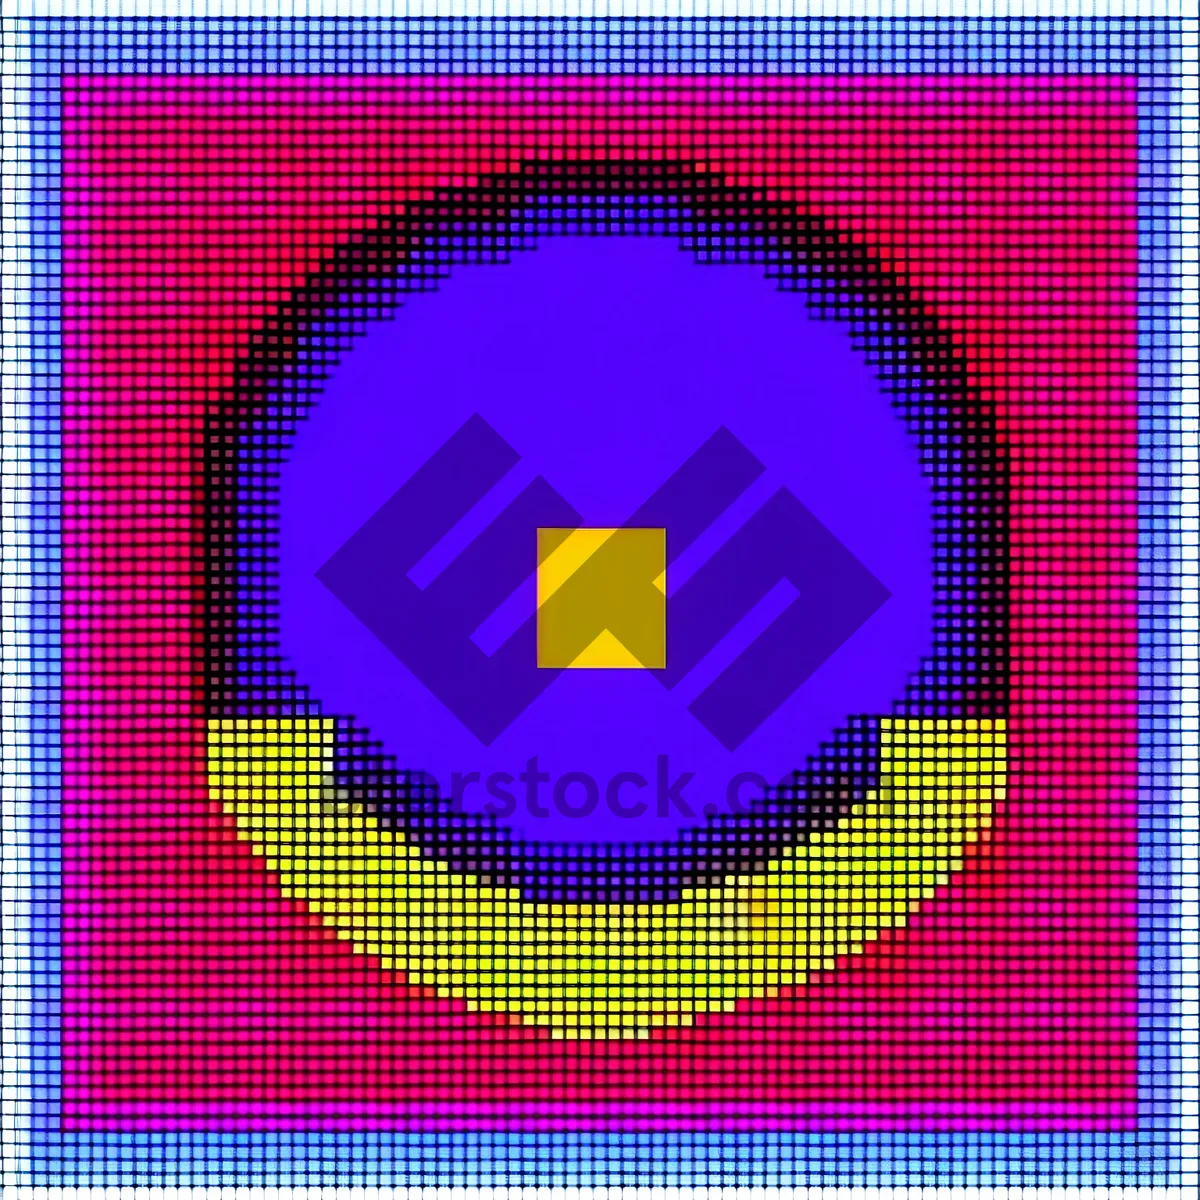 Picture of Modern Mosaic Grid Design - Digital Pixel Art